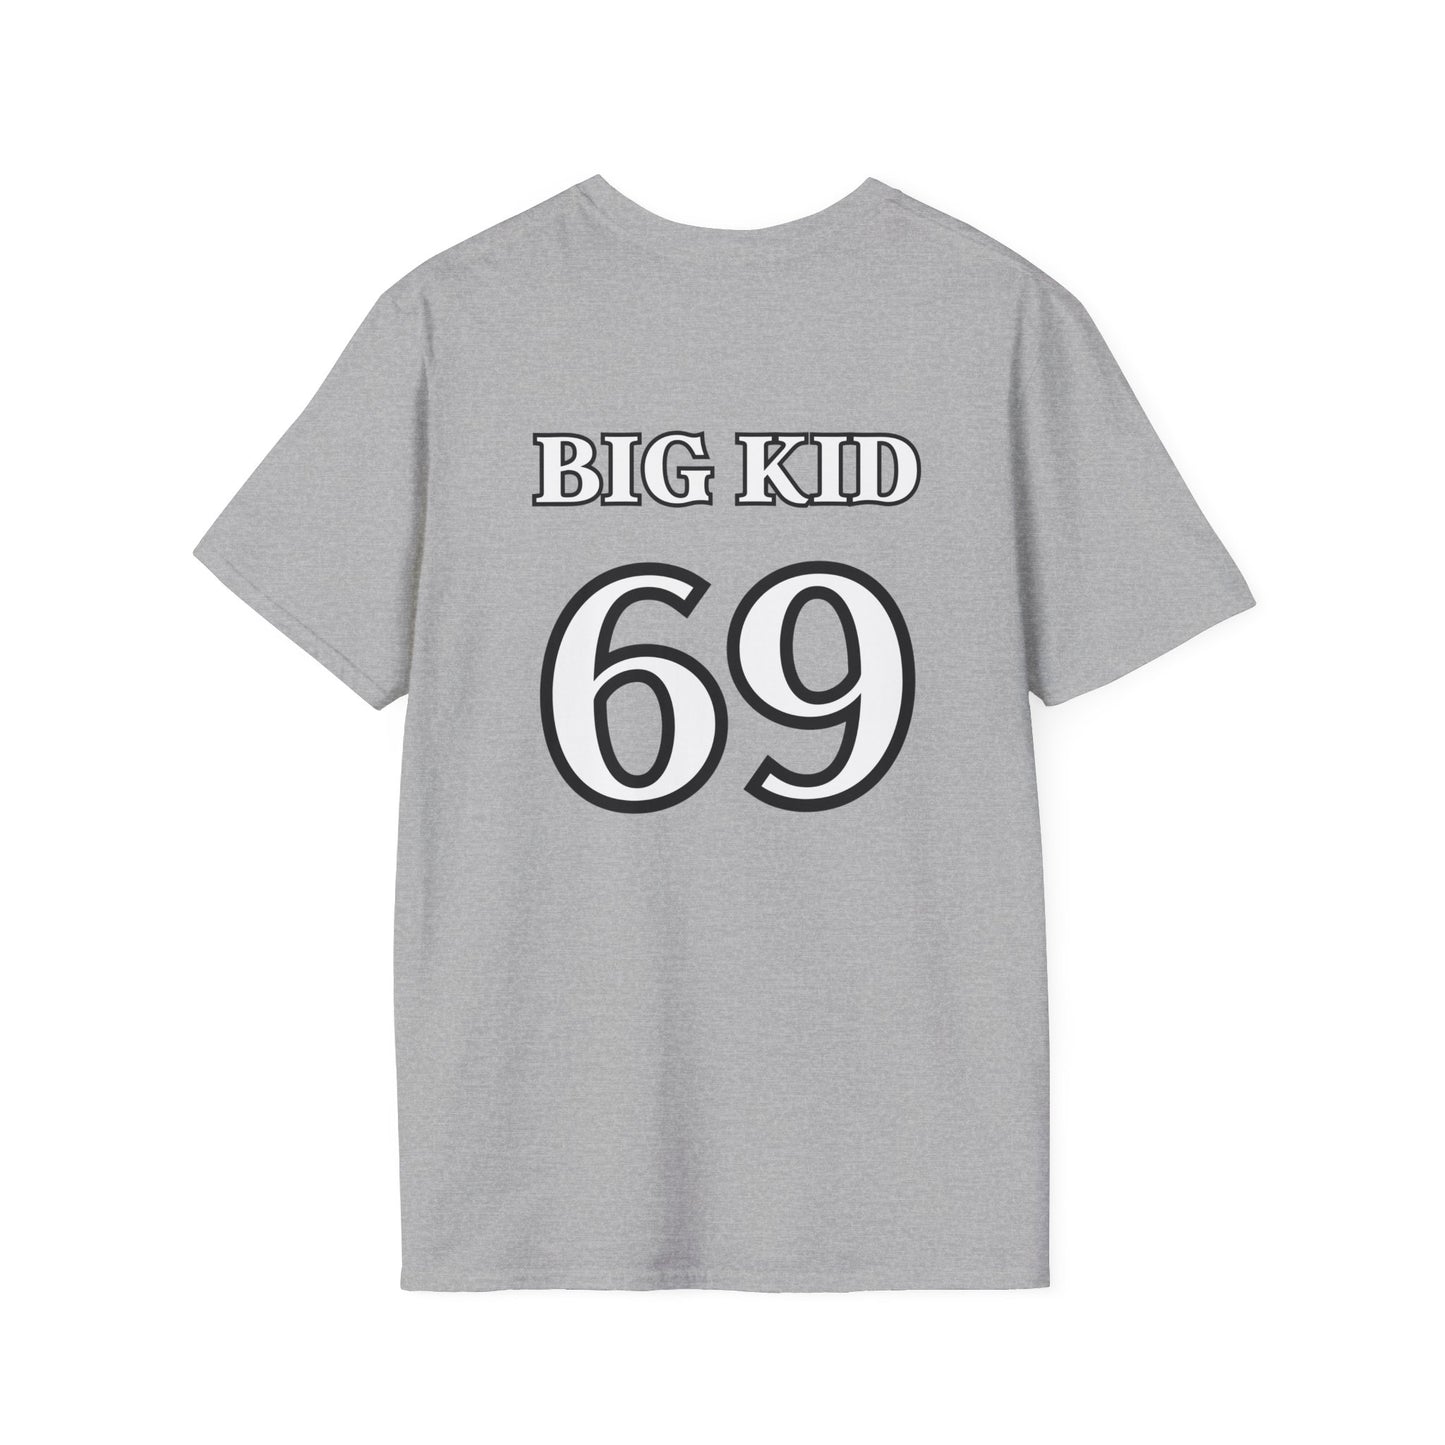 BIG KID 69 - tee x Sarah Words Collection